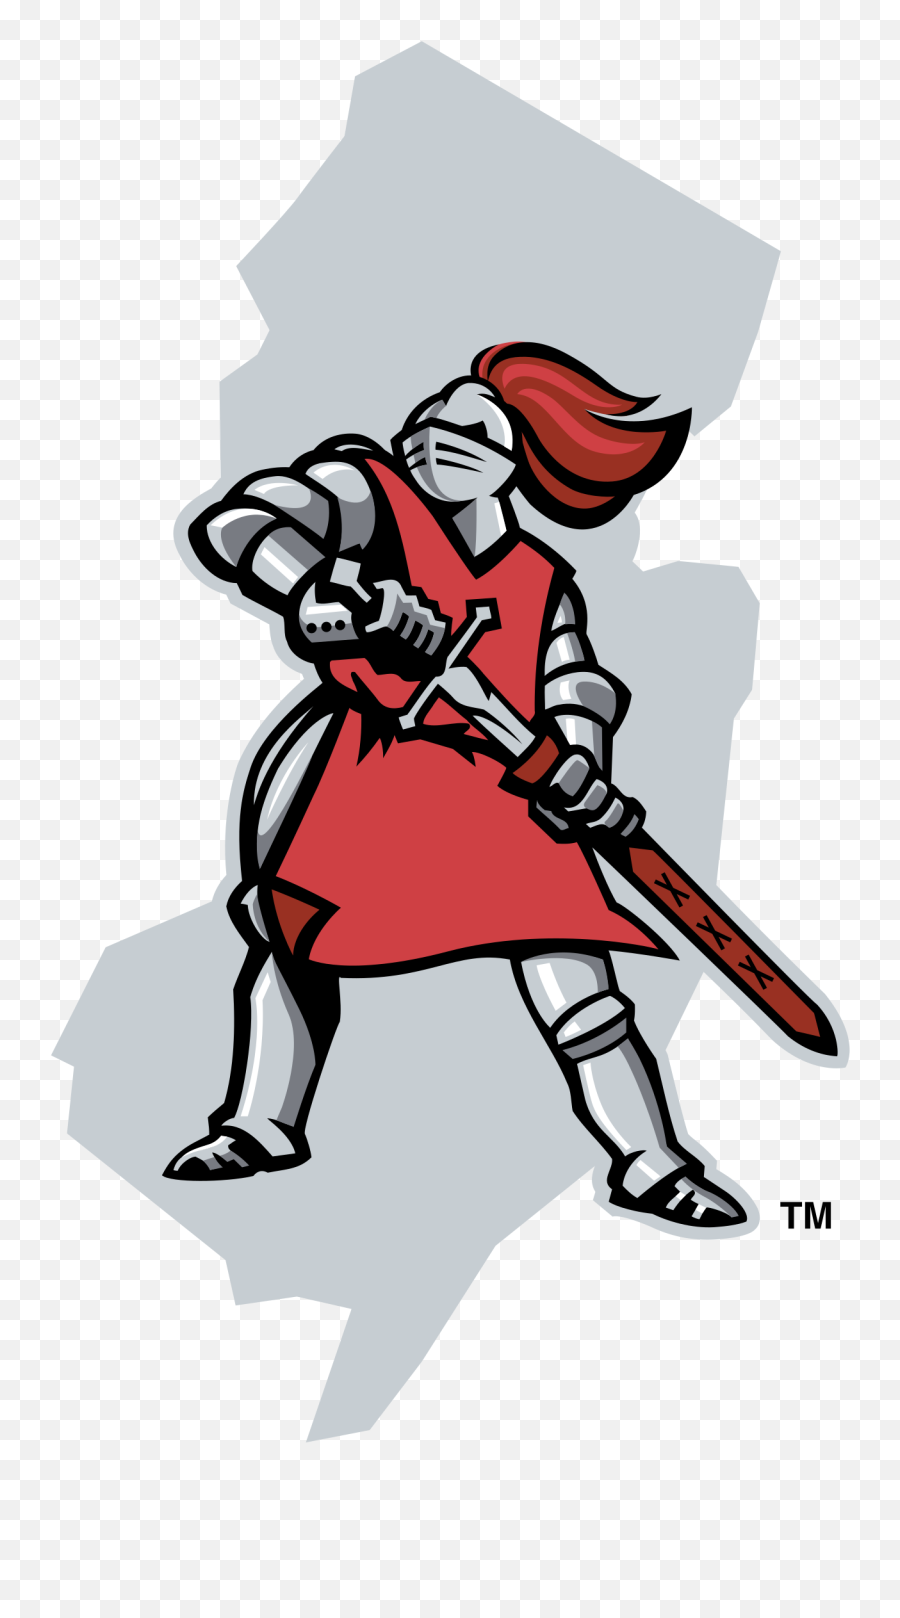 Rutgers Scarlet Knights Logo Png Transparent U0026 Svg Vector - Rutgers Scarlet Knights,Knight Transparent